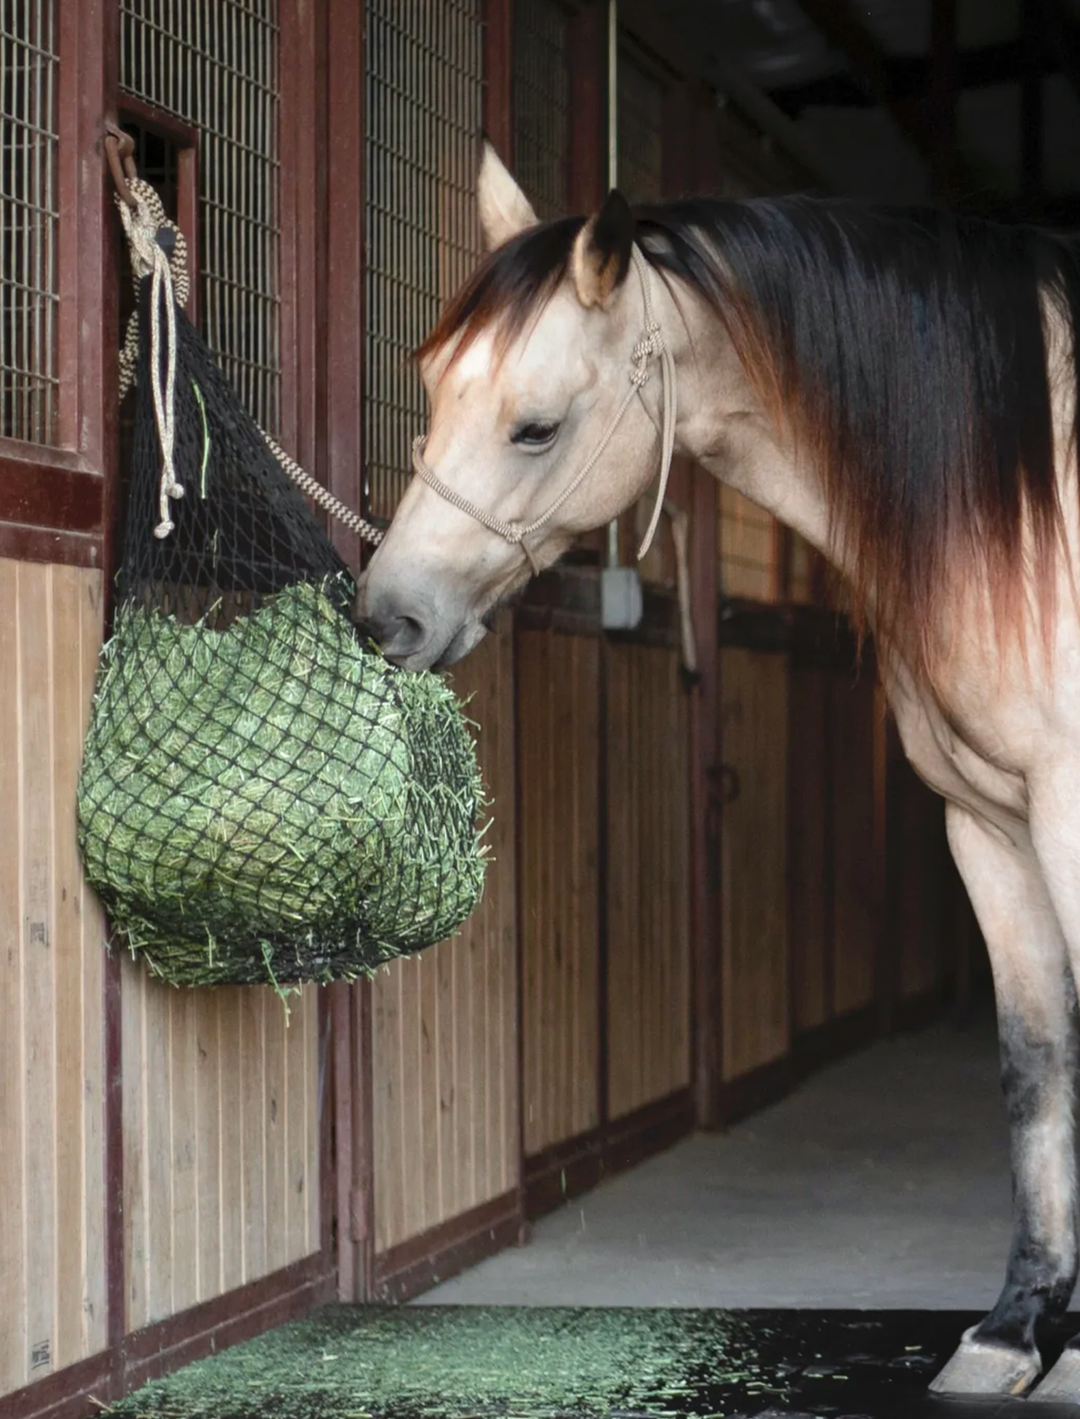 <img src="haynet.jpg" alt="Horse eating out of hay net" />